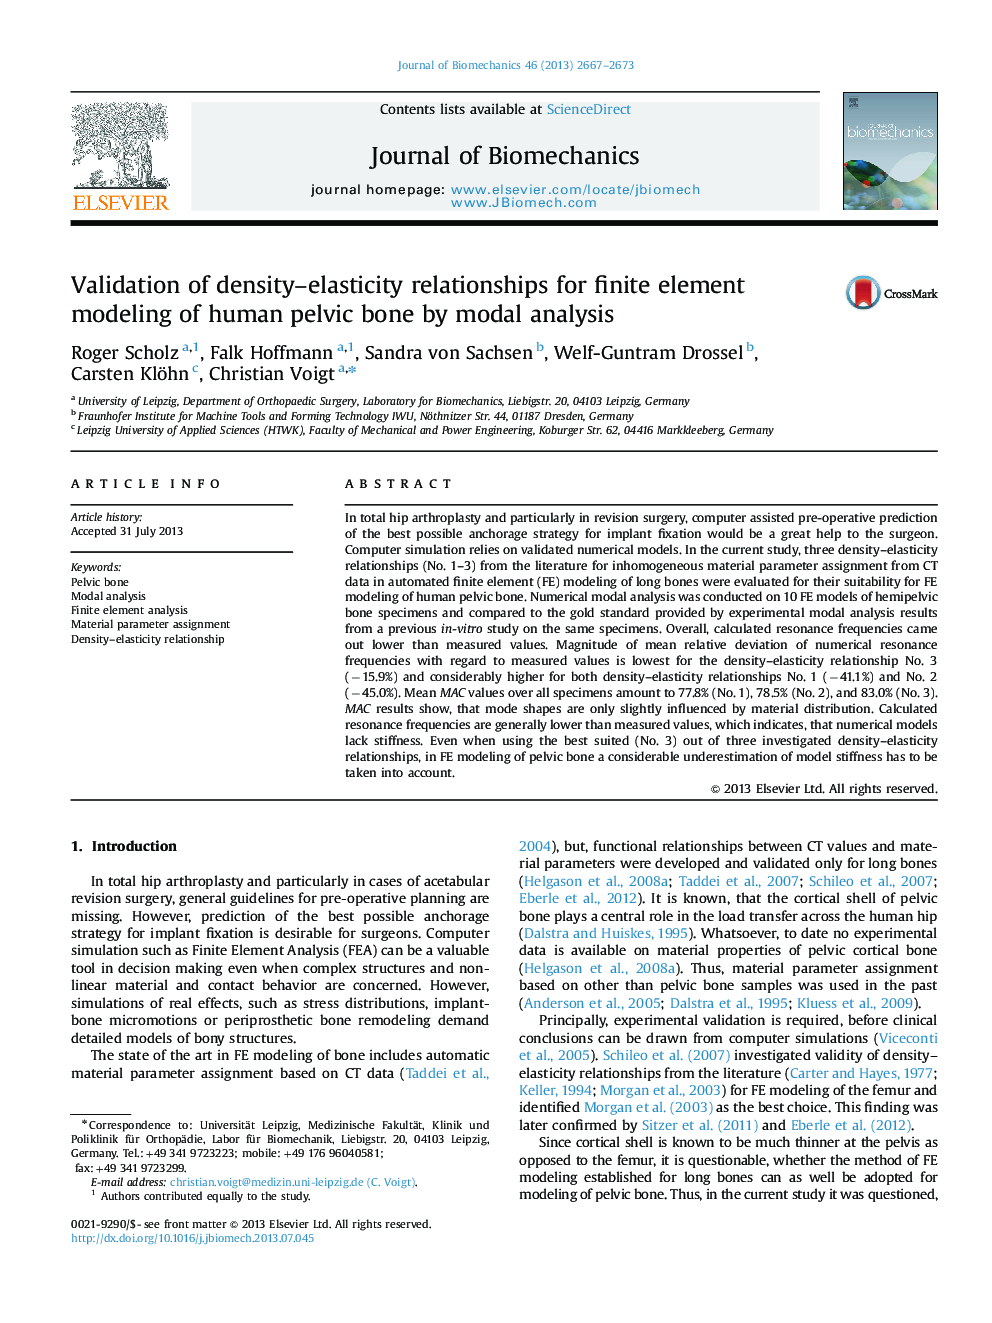 Validation of density-elasticity relationships for finite element modeling of human pelvic bone by modal analysis